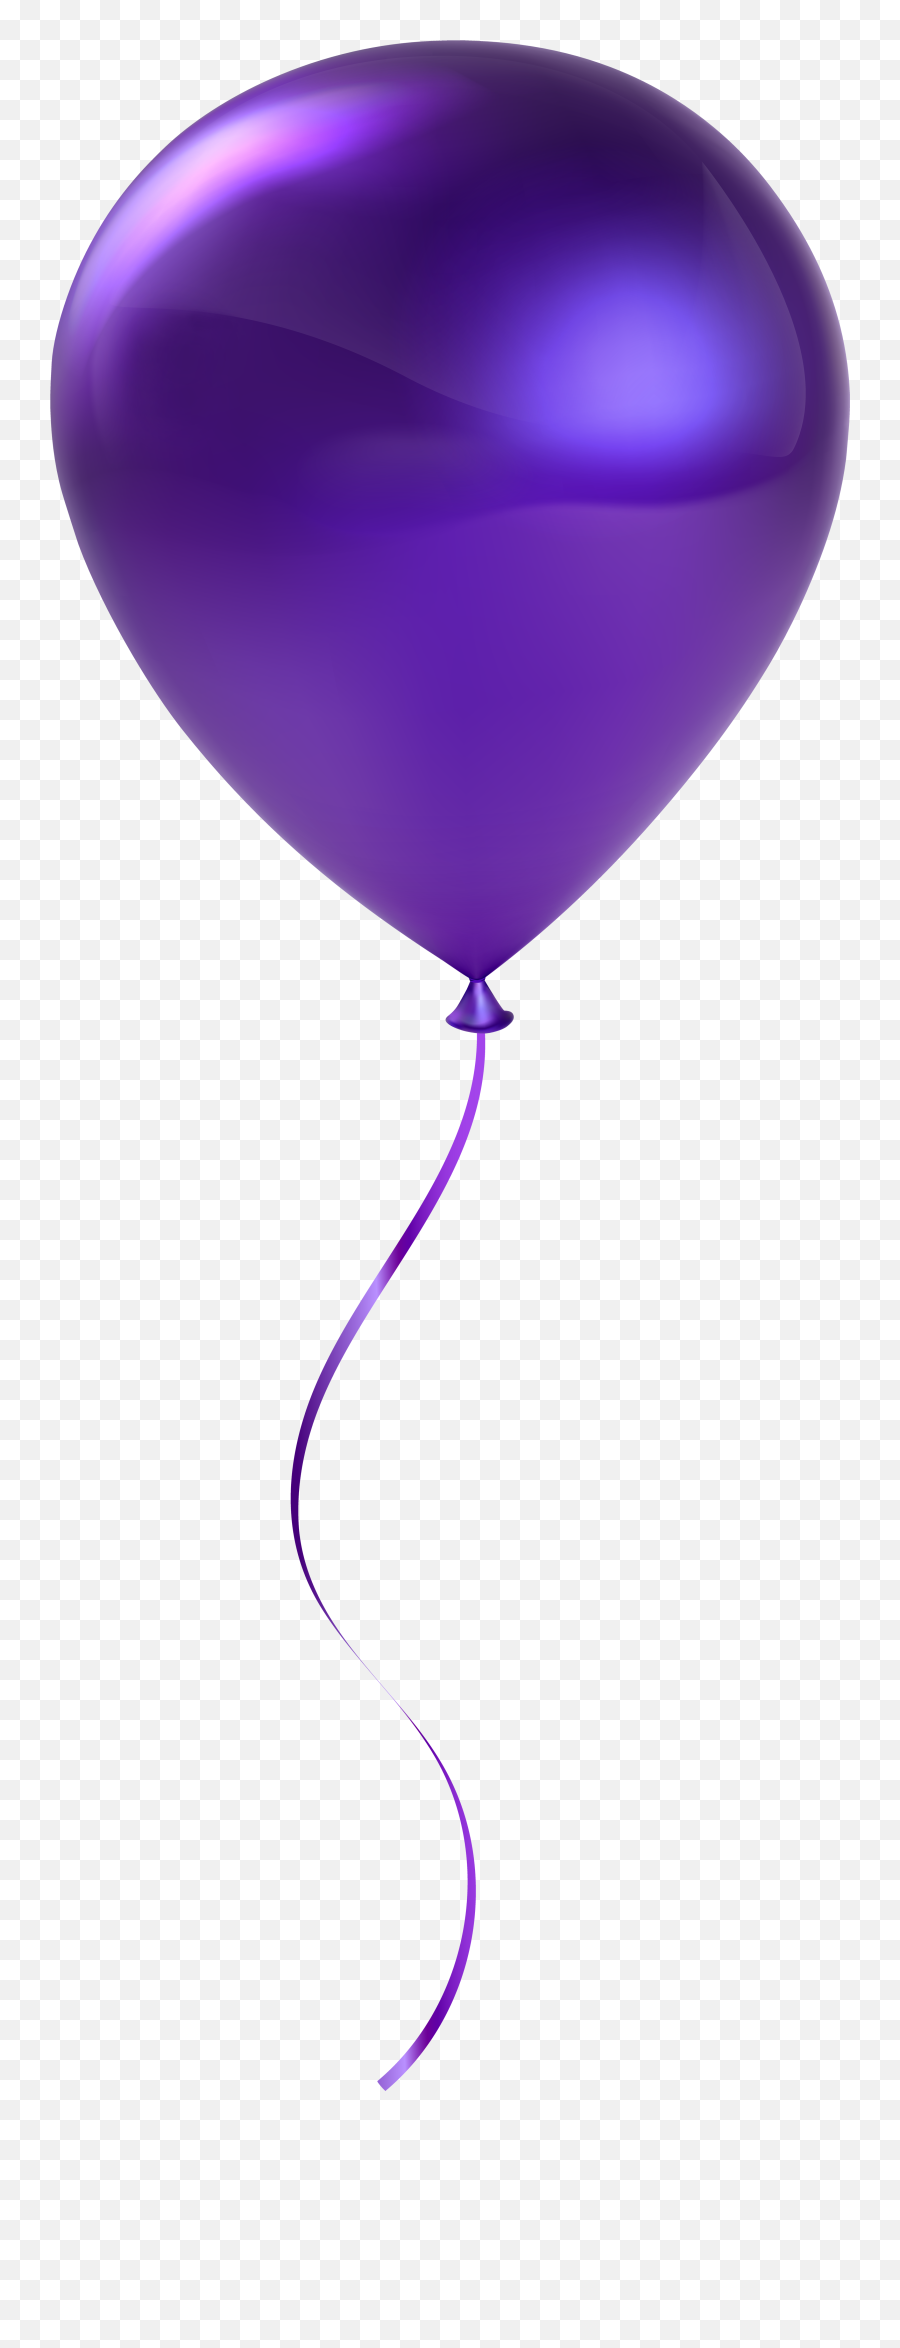 Single Purple Balloon Transparent Clip Artu200b Gallery Emoji,Single Emojis Party